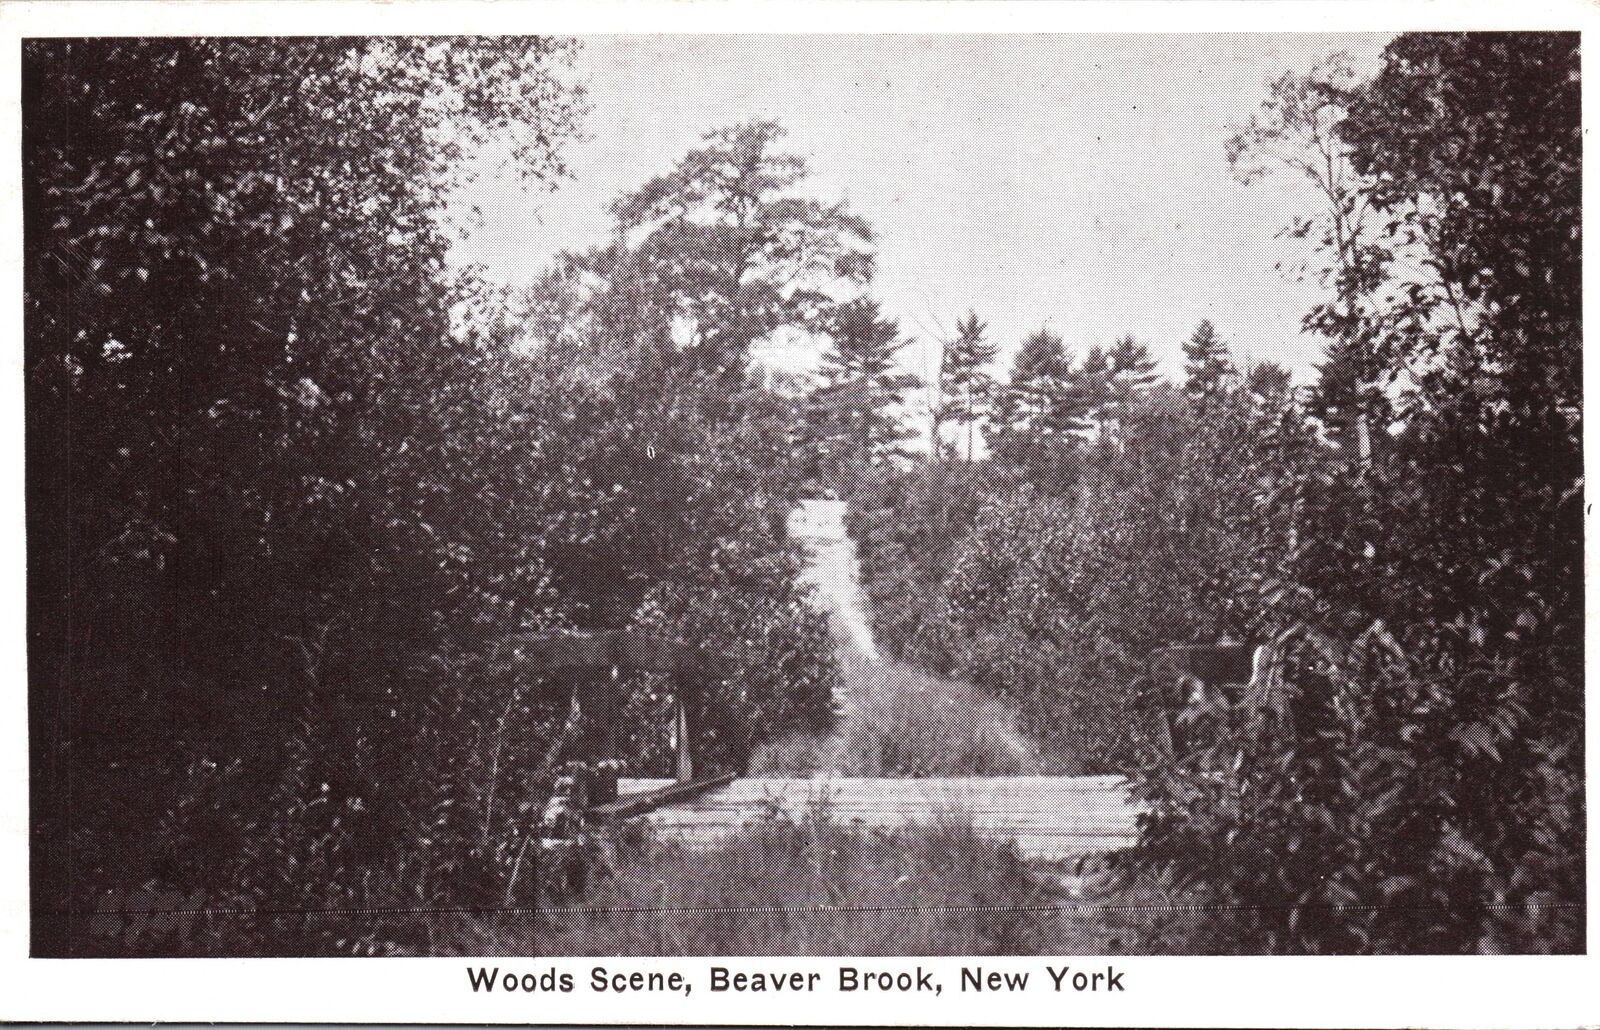 VINTAGE POSTCARD WOODS SCENE AT BEAVER BROOK NEW YORK c. 1920s SCARCE VIEW